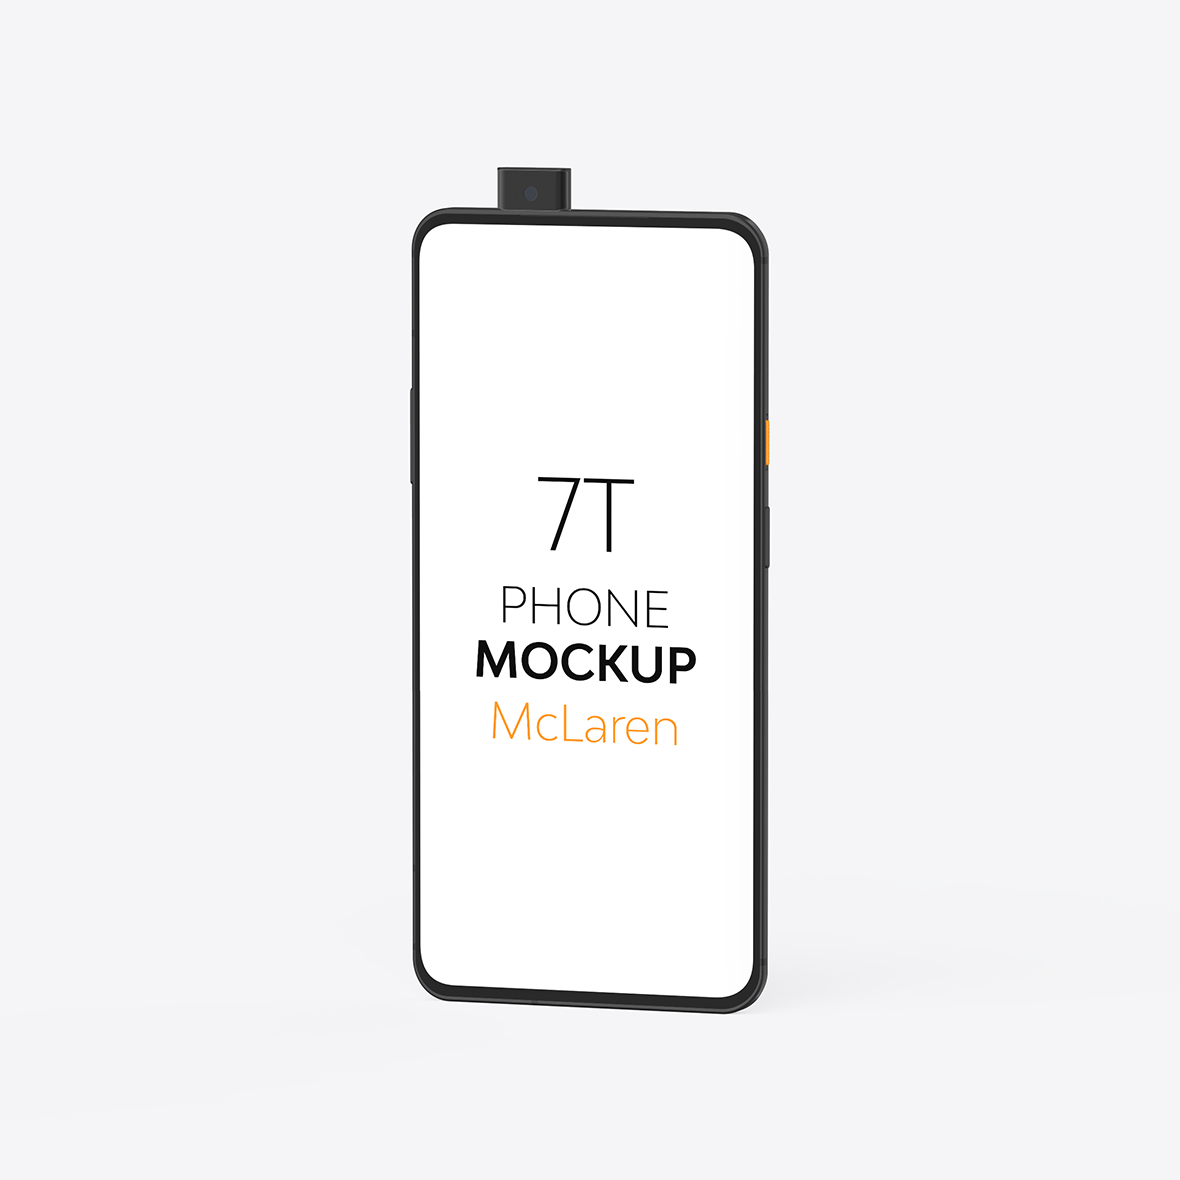 7T Phone Mockup